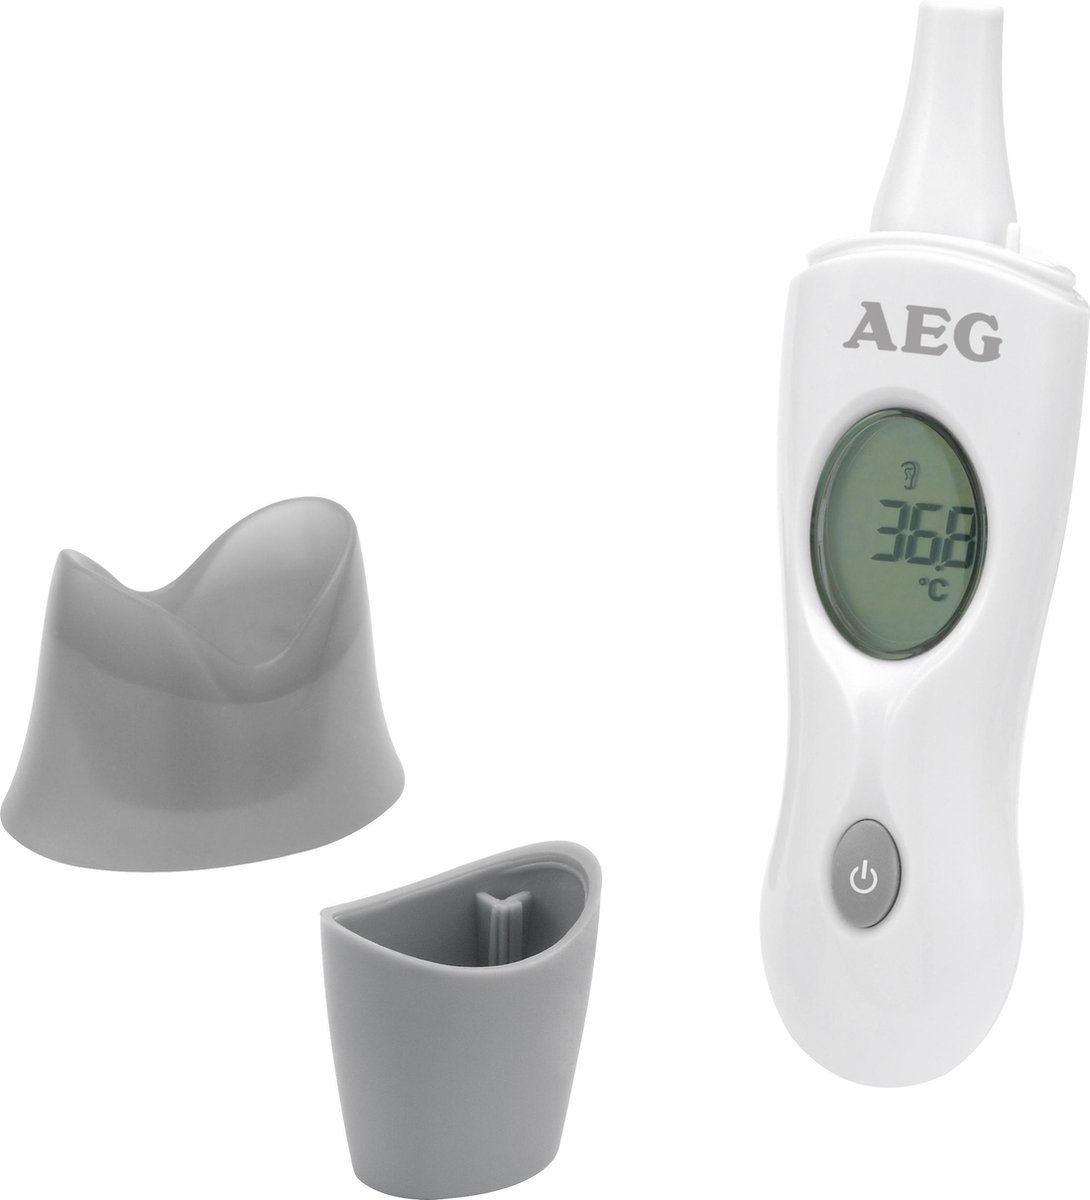 AEG FT 4925 - Infrarood Thermometer - Wit | bol.com